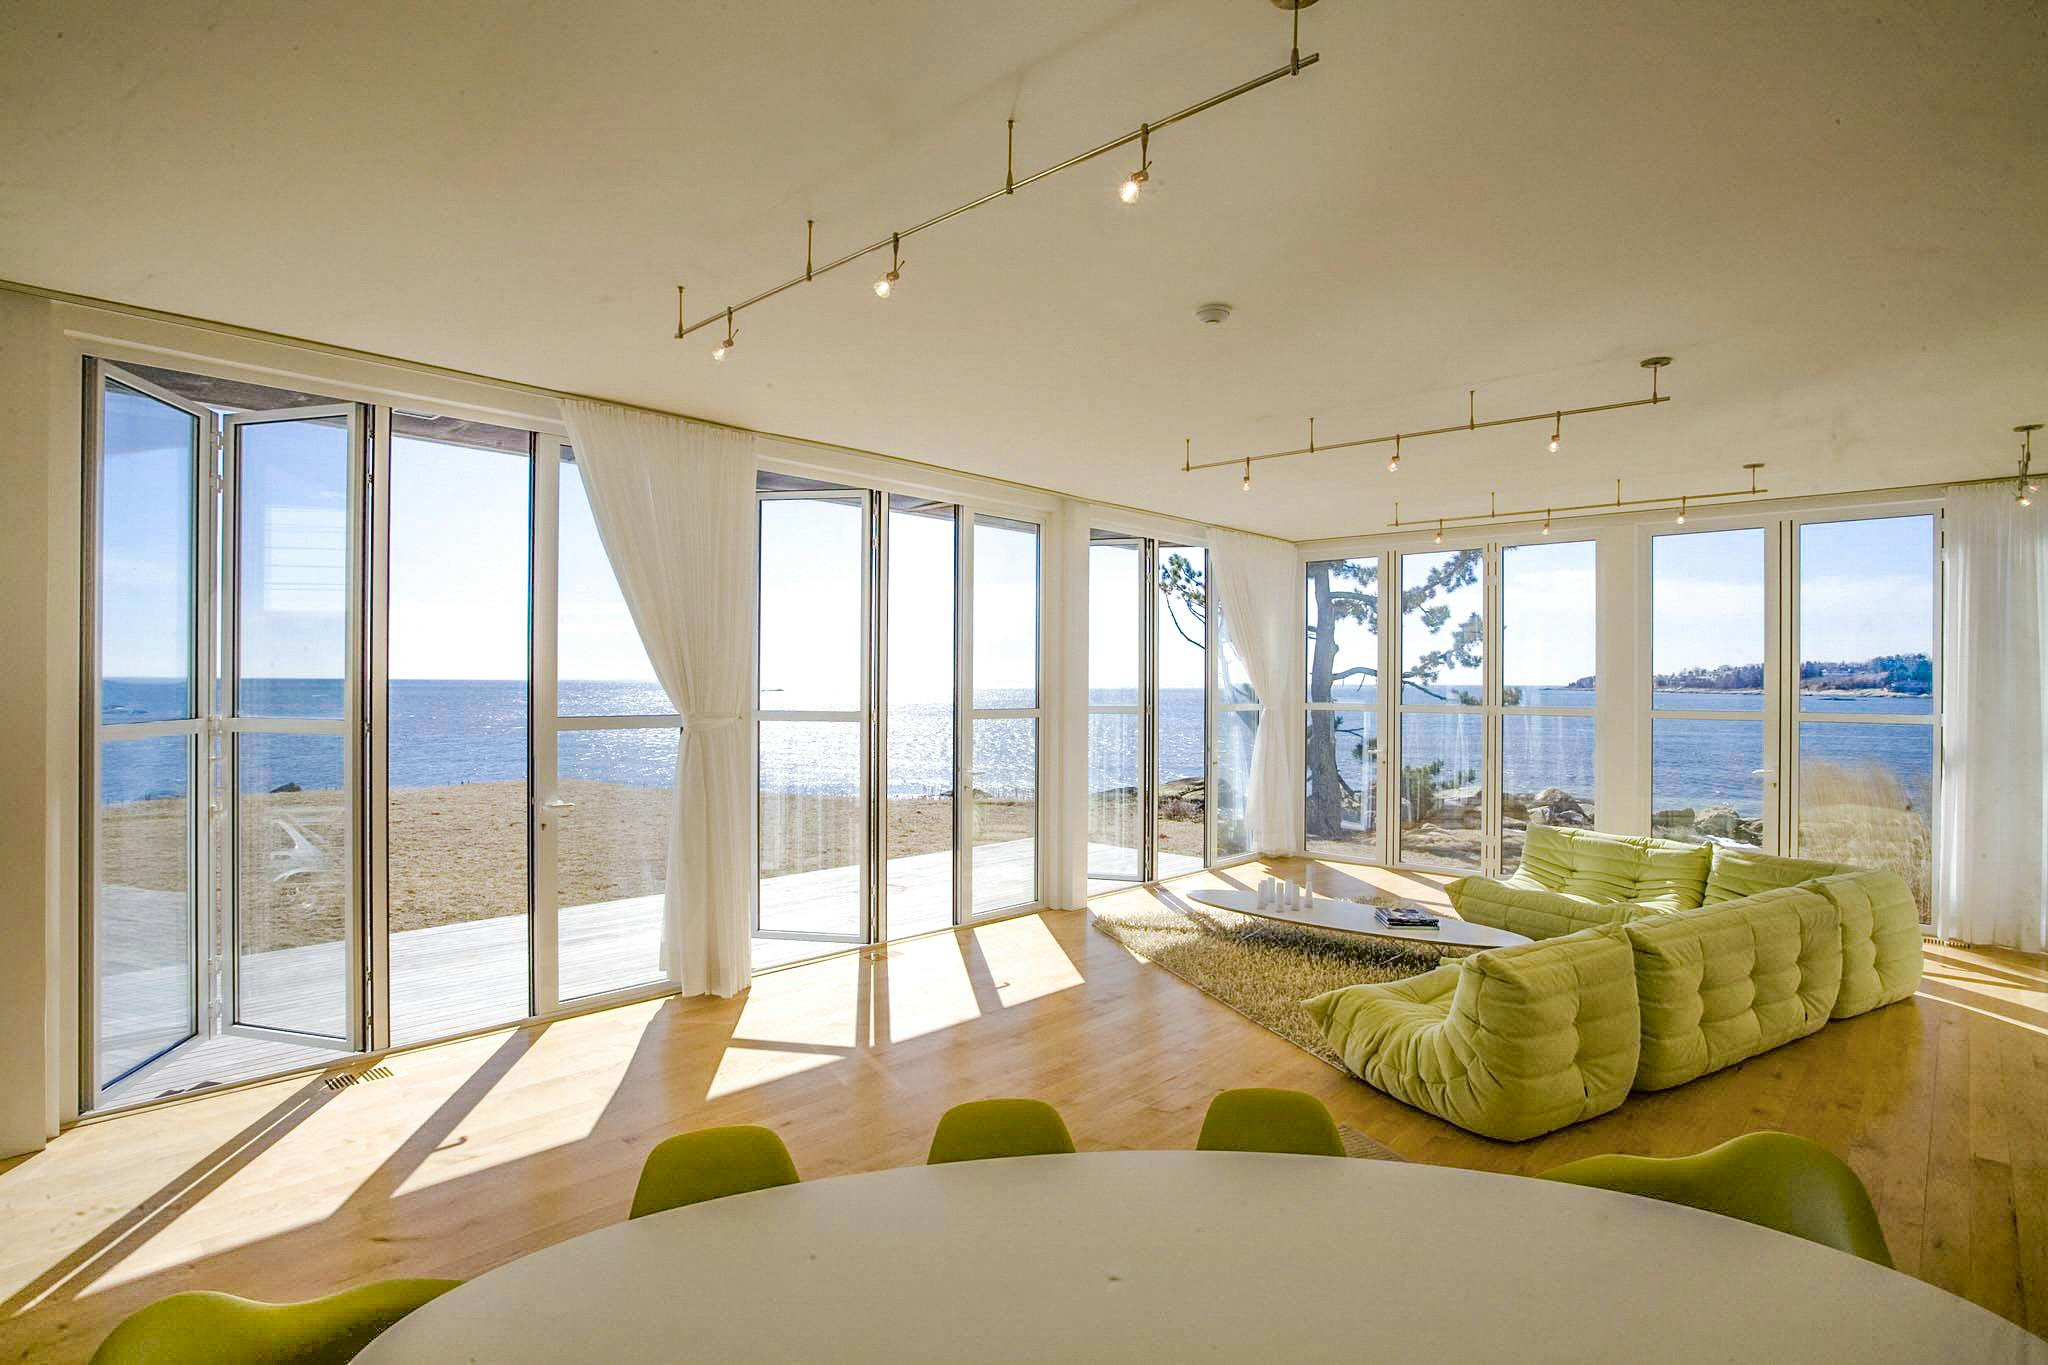 panoramic views through residential glass walls